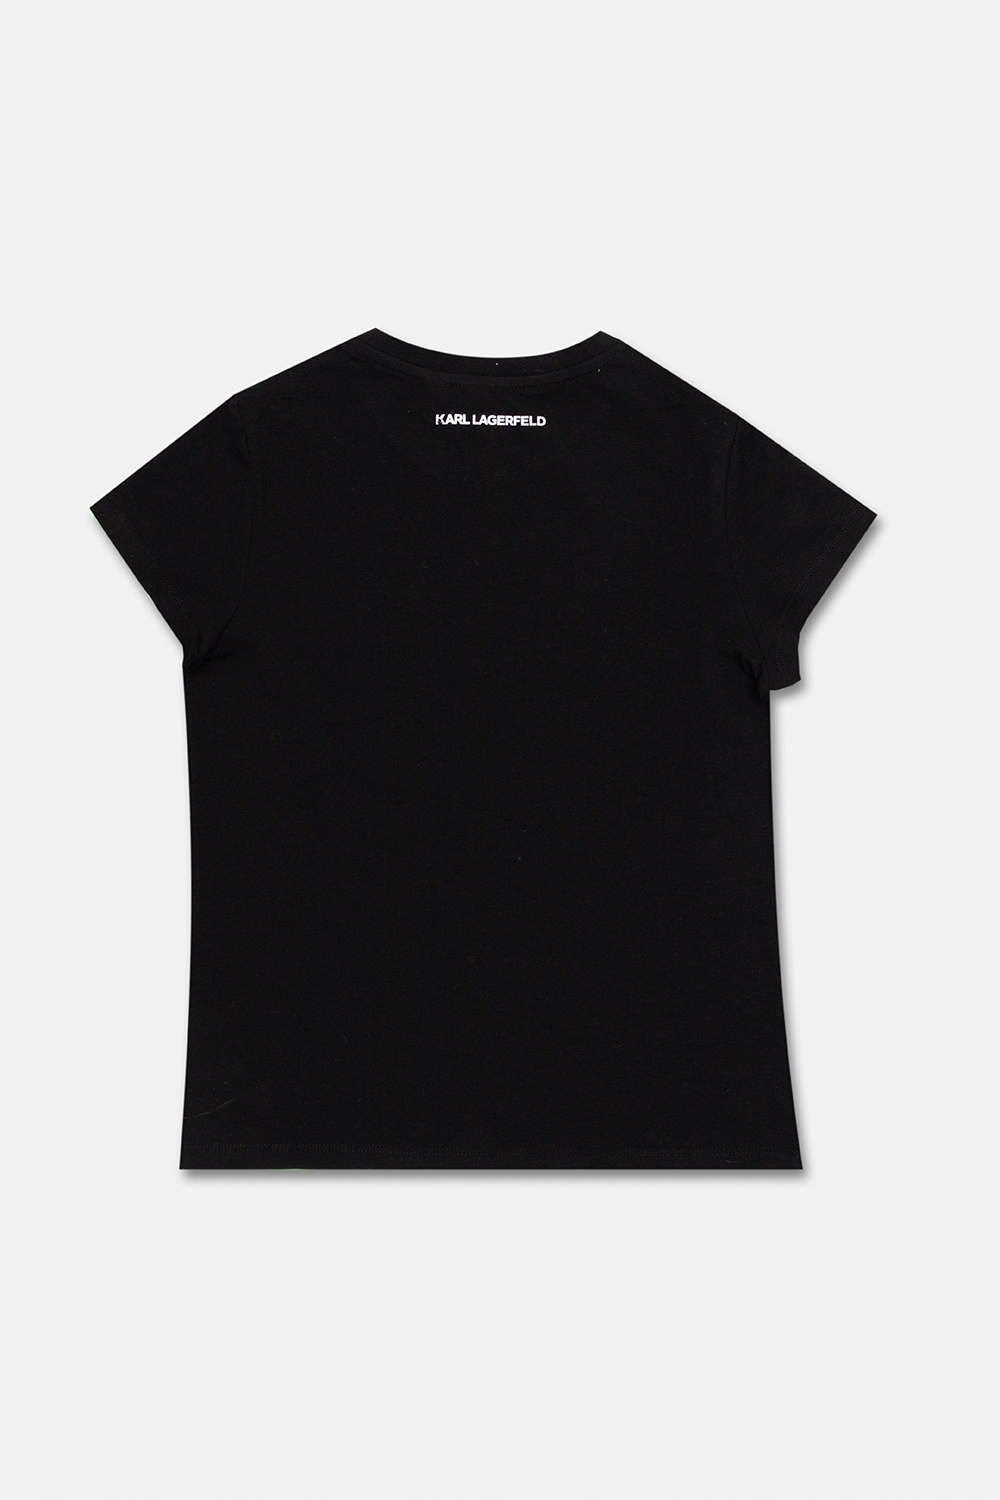 Karl Lagerfeld Kids Conjunto T Shirt Shorts Youccie Cinza D0528